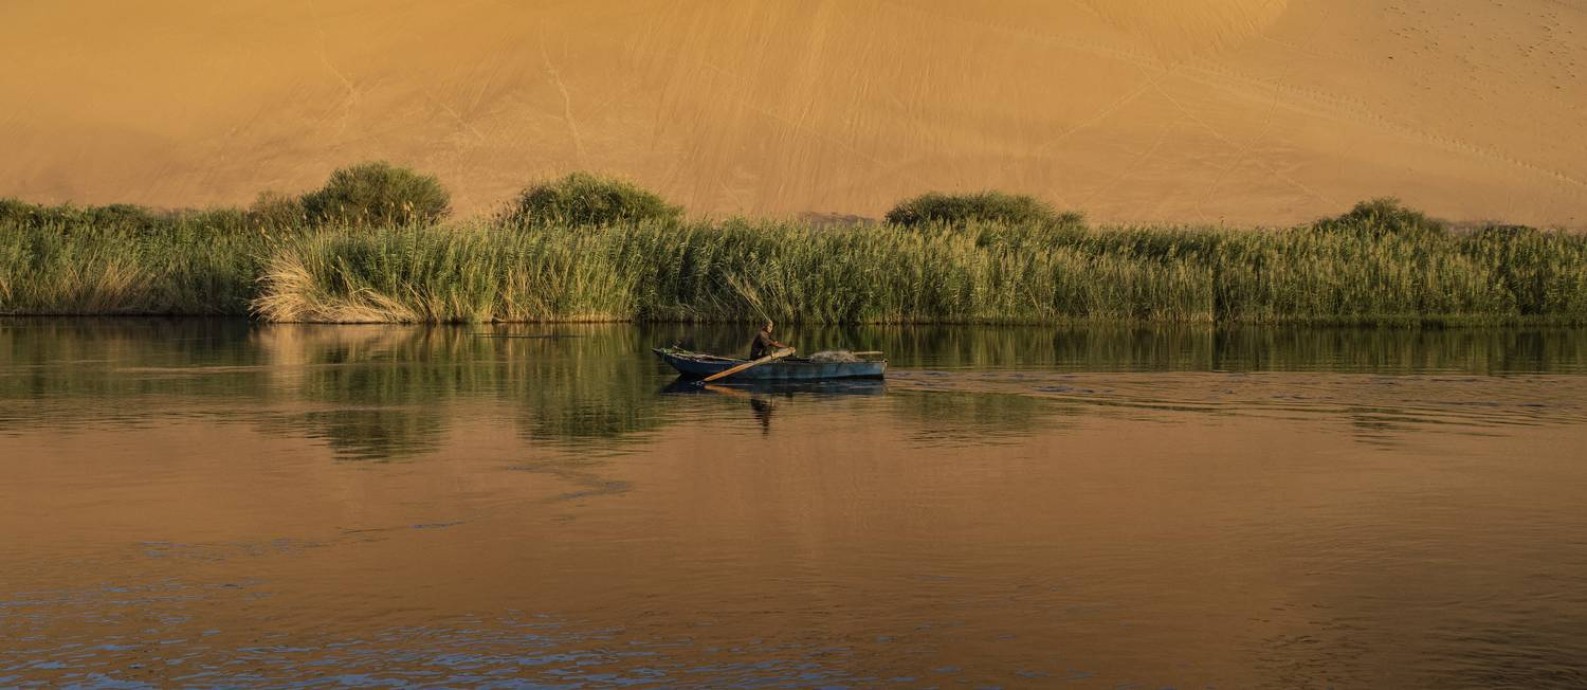 O pescador Abdel Halim Abdel Aziz no Rio Nilo, em Aswan, Egito. Foto: LAURA BOUSHNAK / NYT